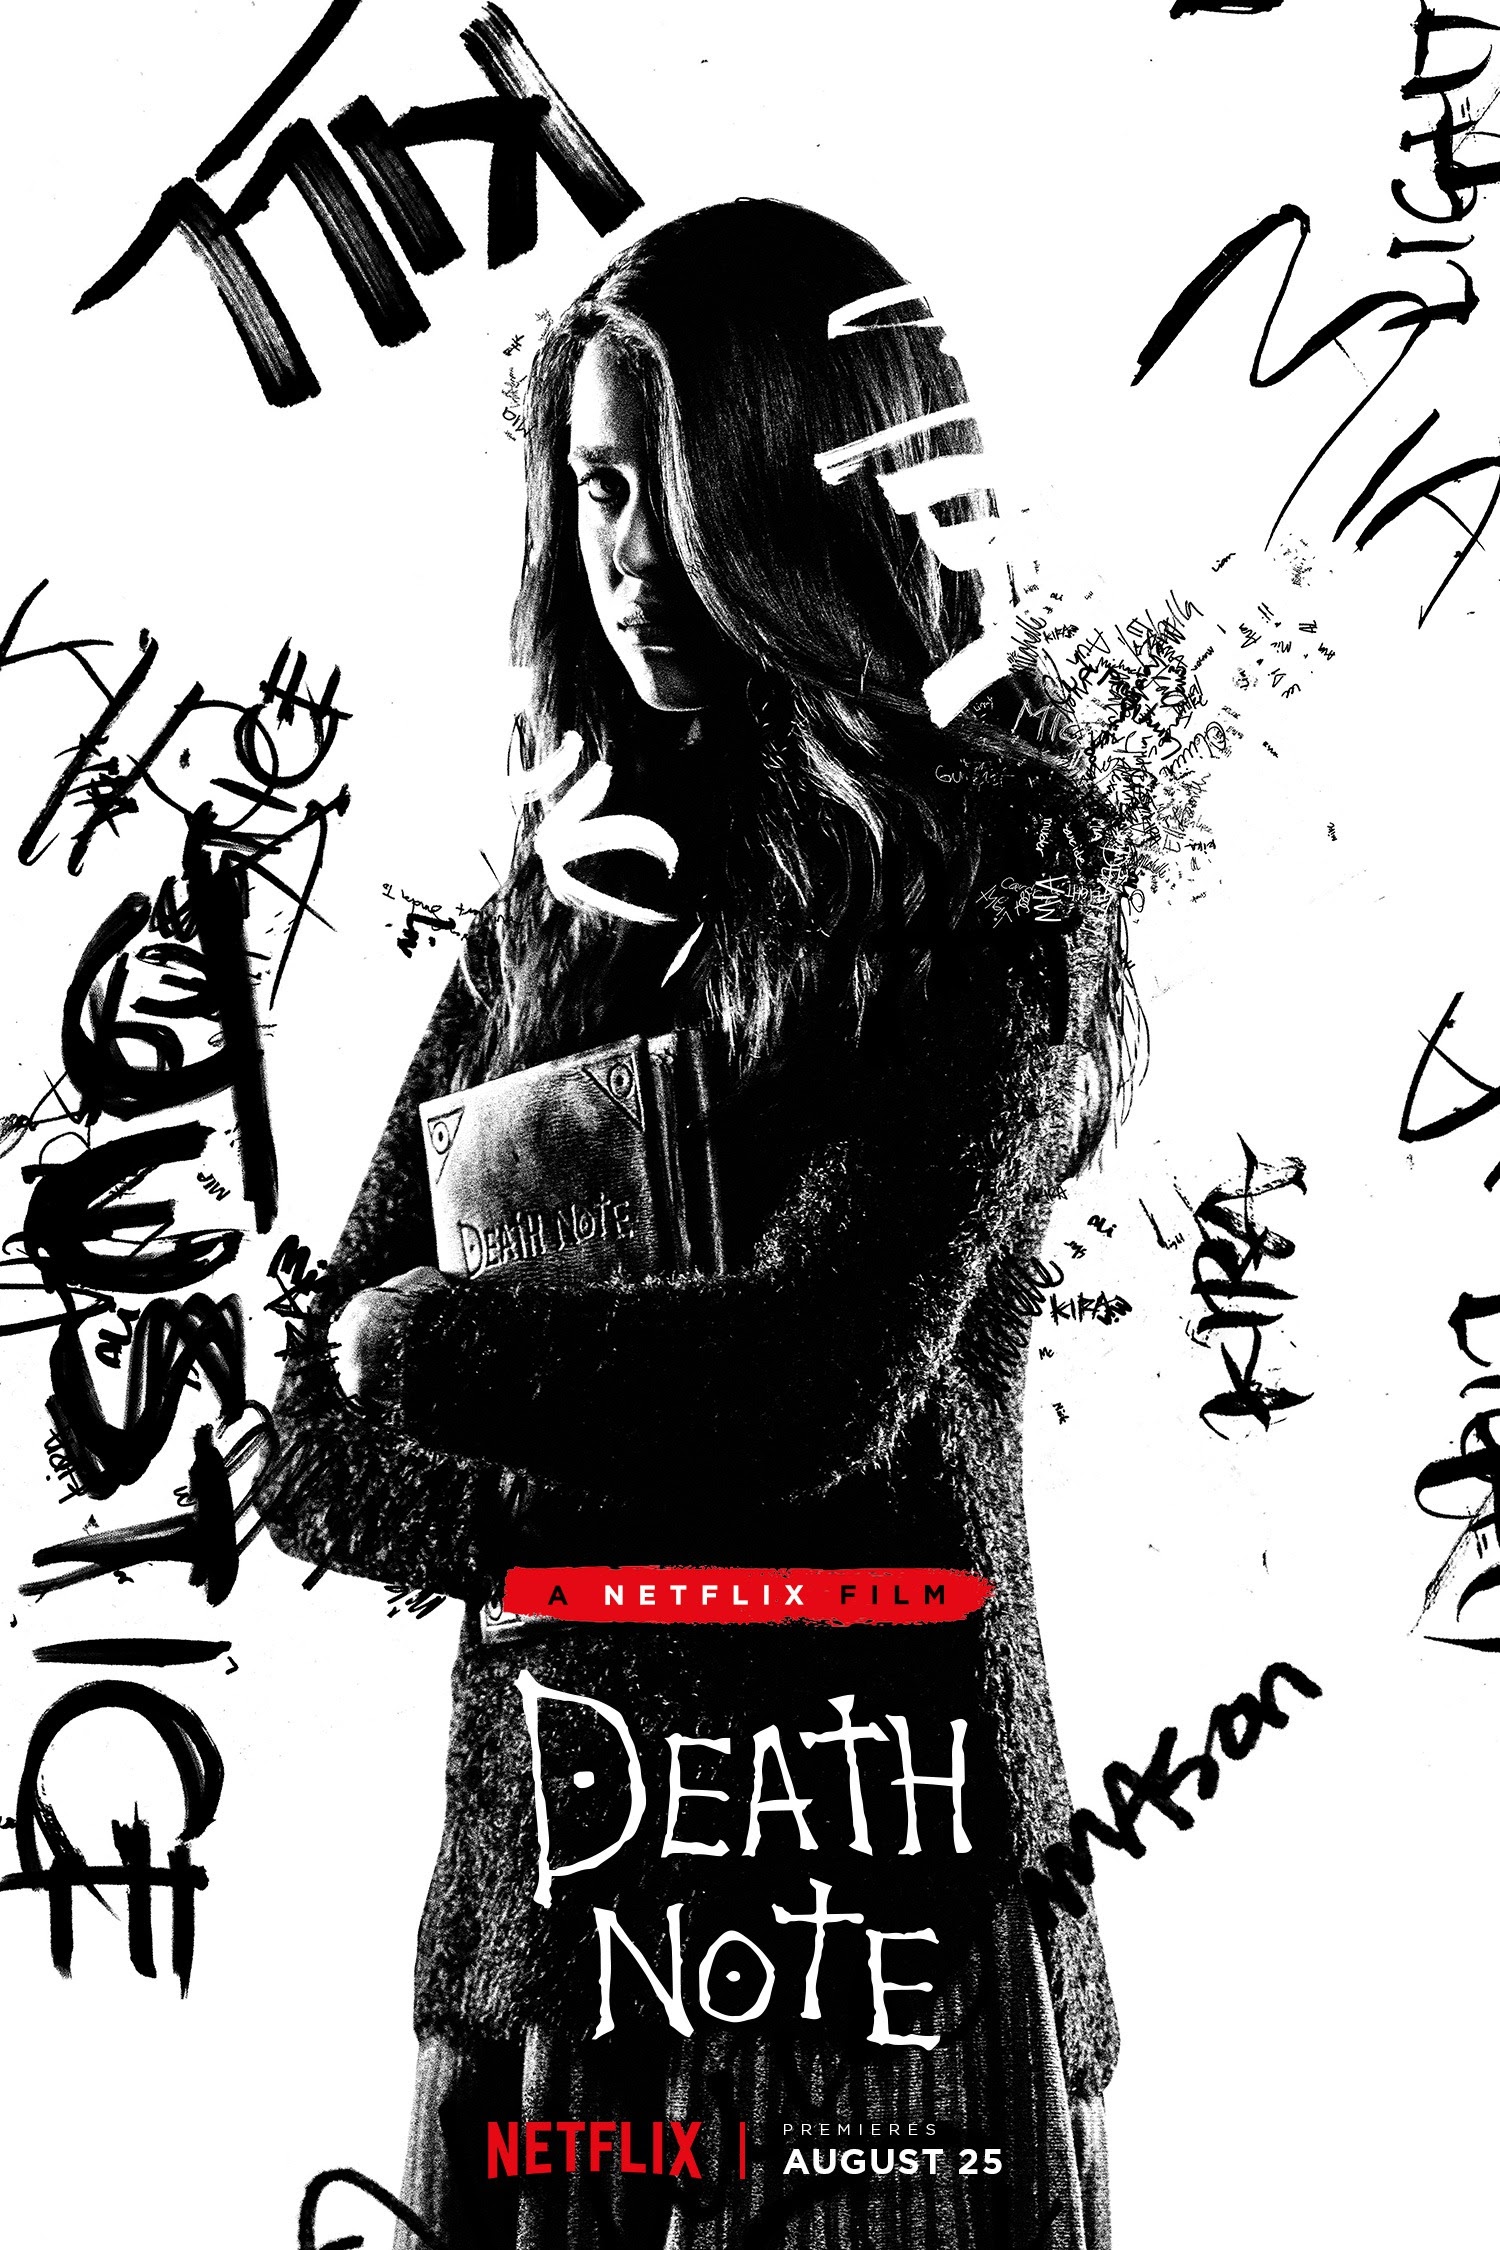 Death Note ハリウッド版実写映画 デスノート が 死神リュークにうながされて キラへと生まれ変わるライトの新世紀の神の正義が実行される本編シーンをリリース Cia Movie News